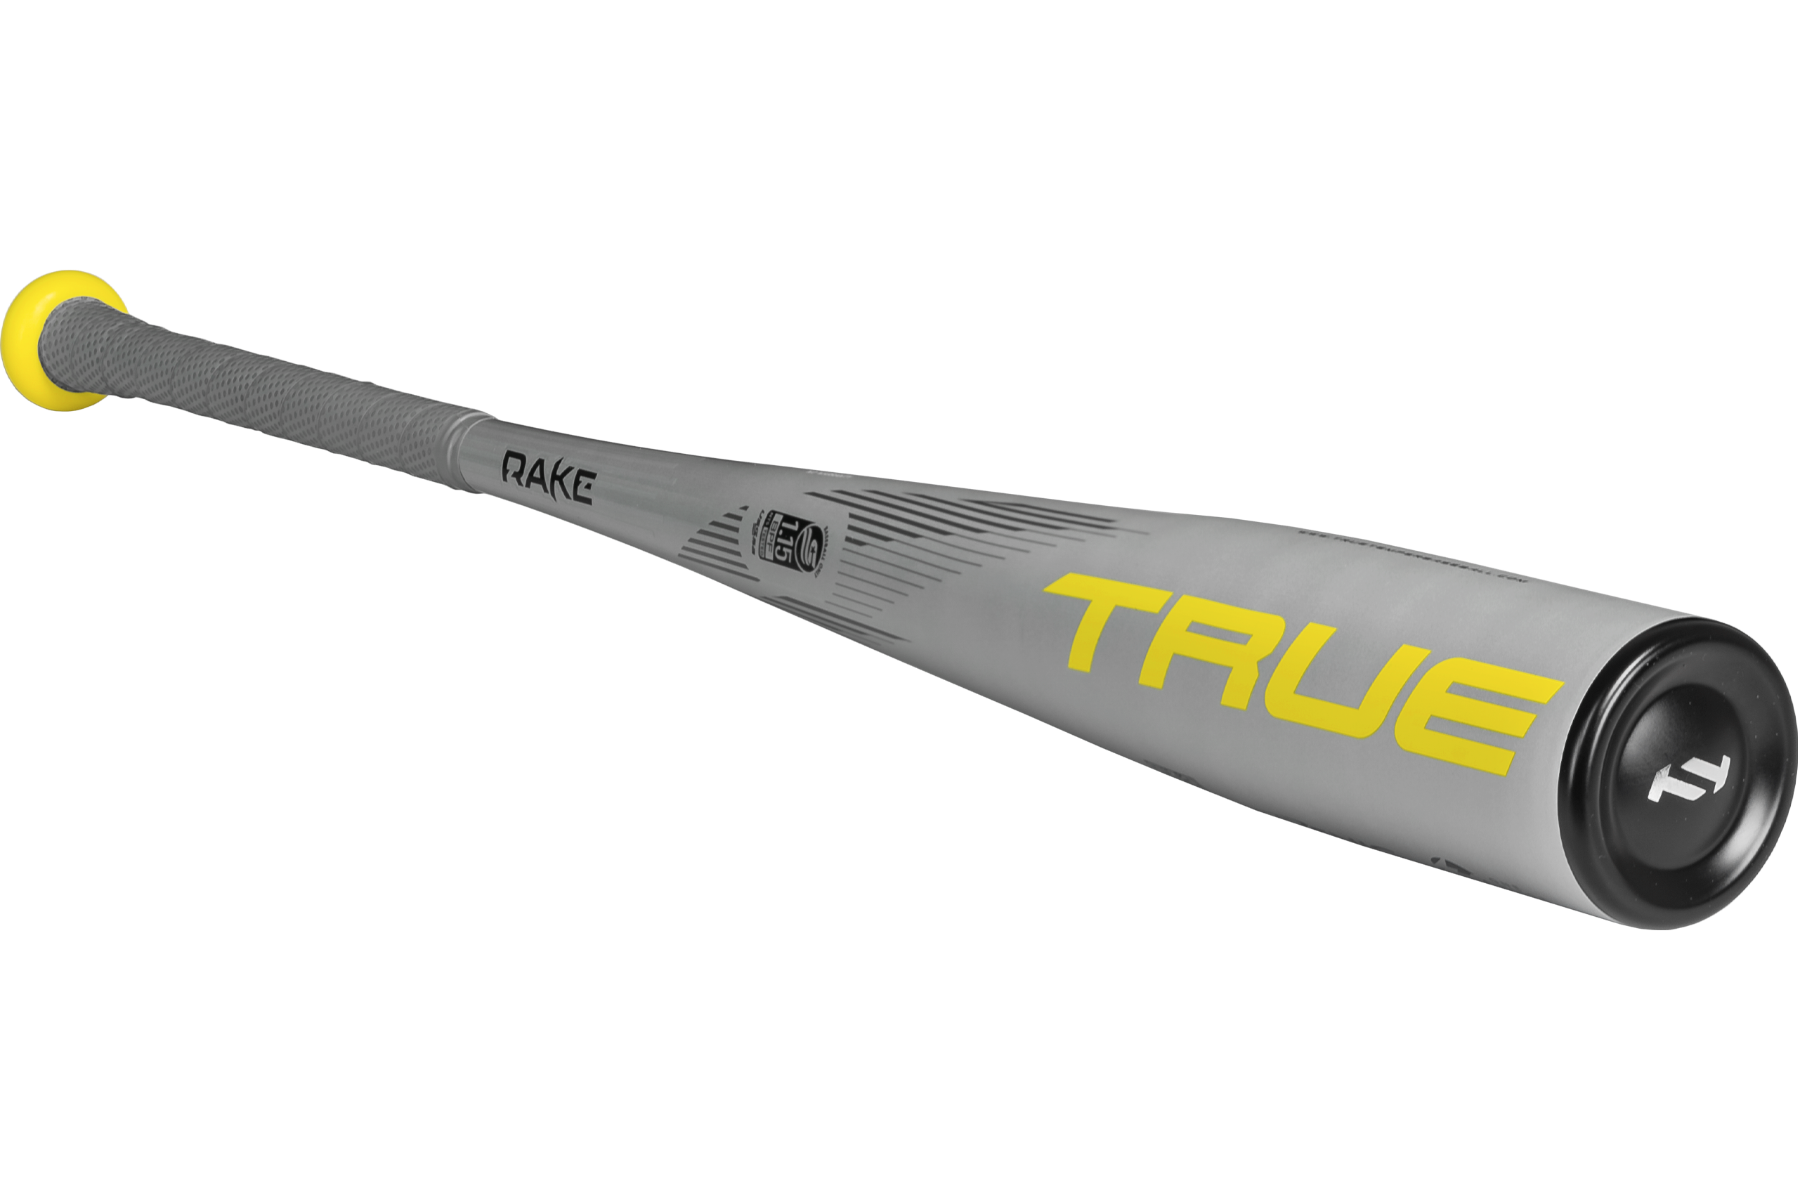 True Temper - RAKE -10 USSSA 2 3/4" Baseball Bat